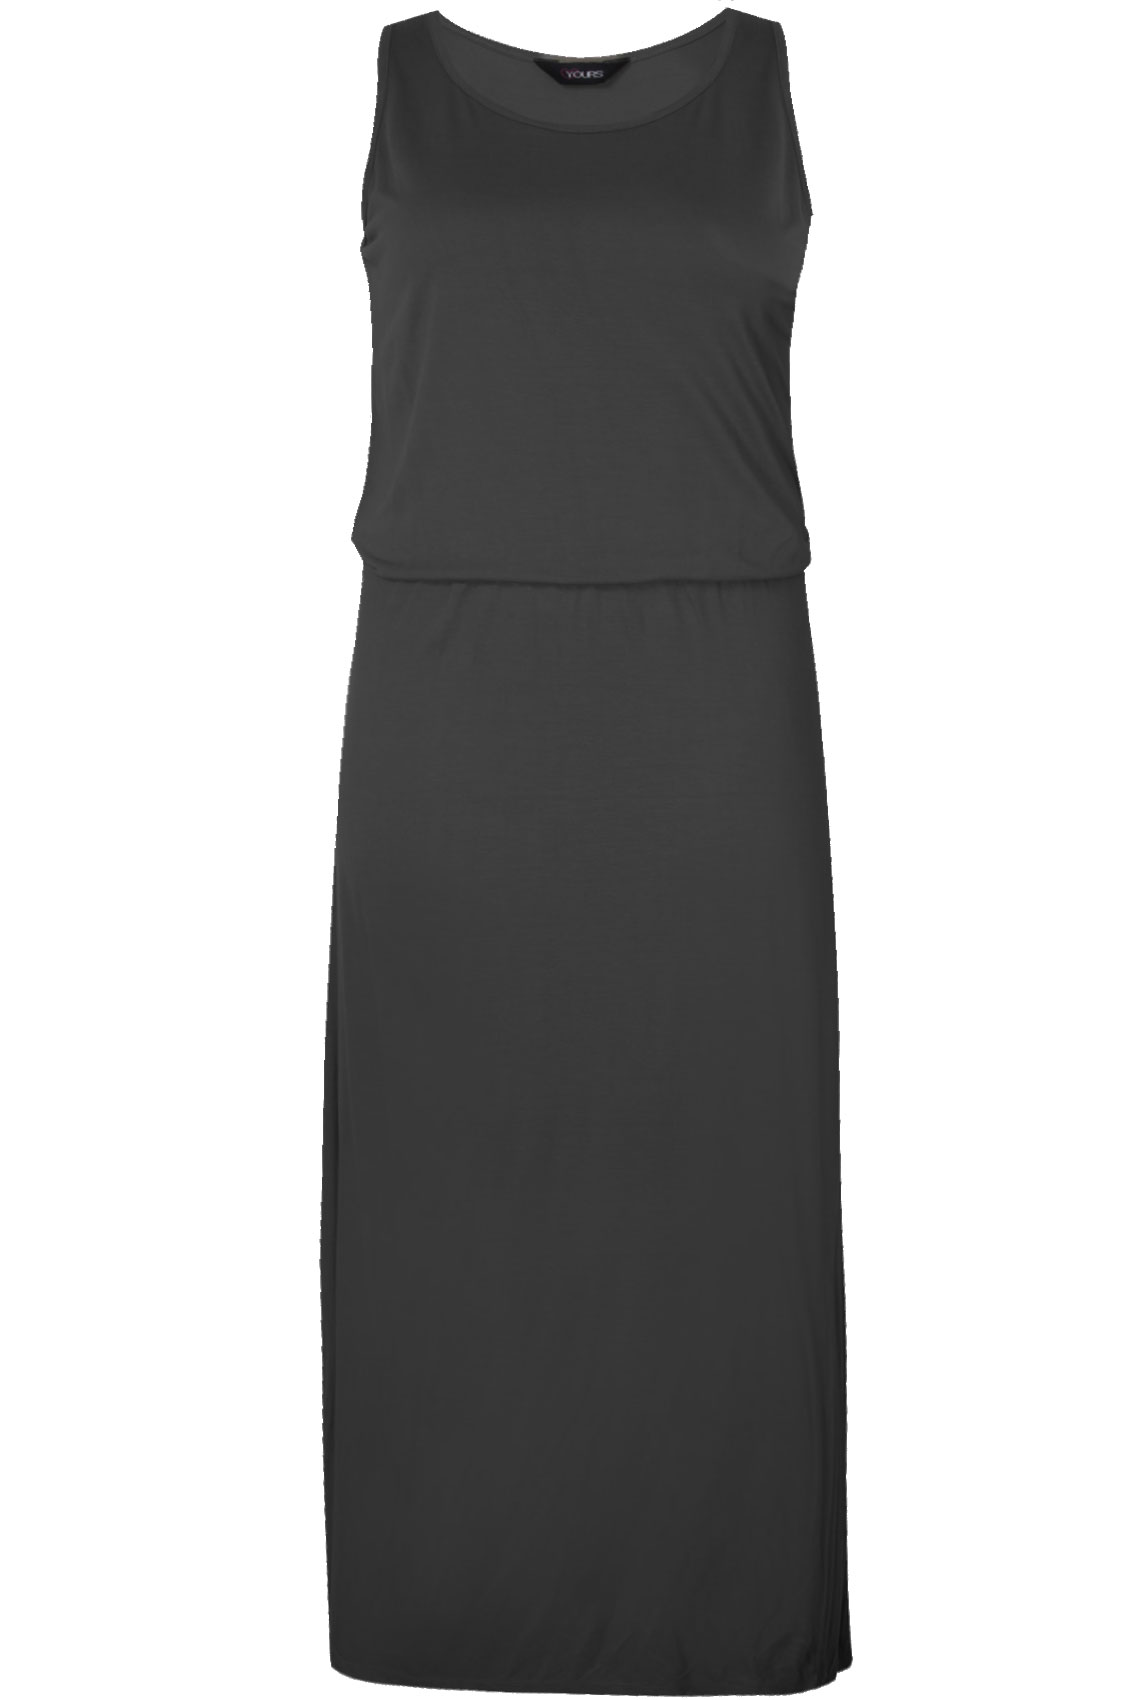 Black Sleeveless Jersey Maxi Dress plus size 16,18,20,22,24,26,28,30,32